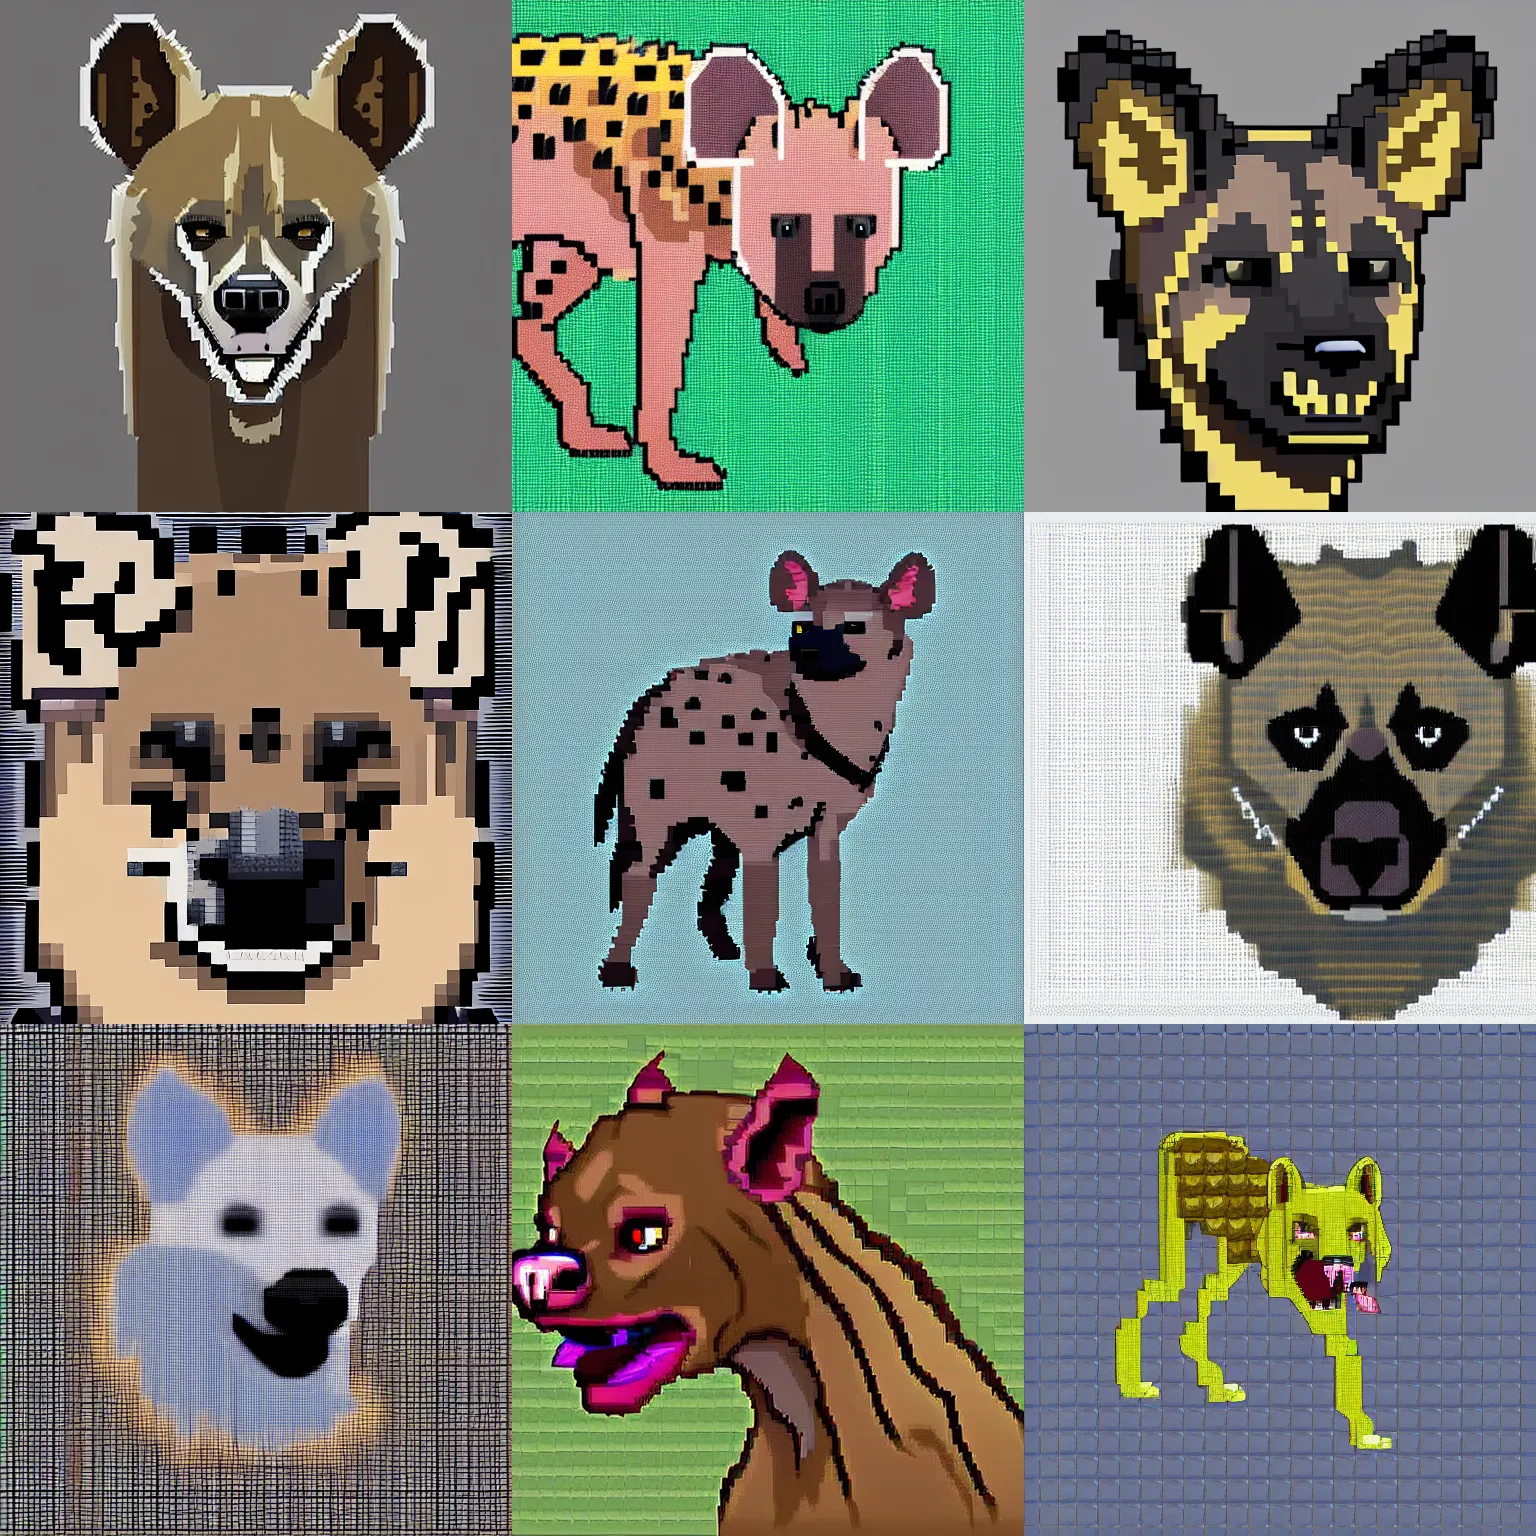 Prompt: a hyena, pixel art style